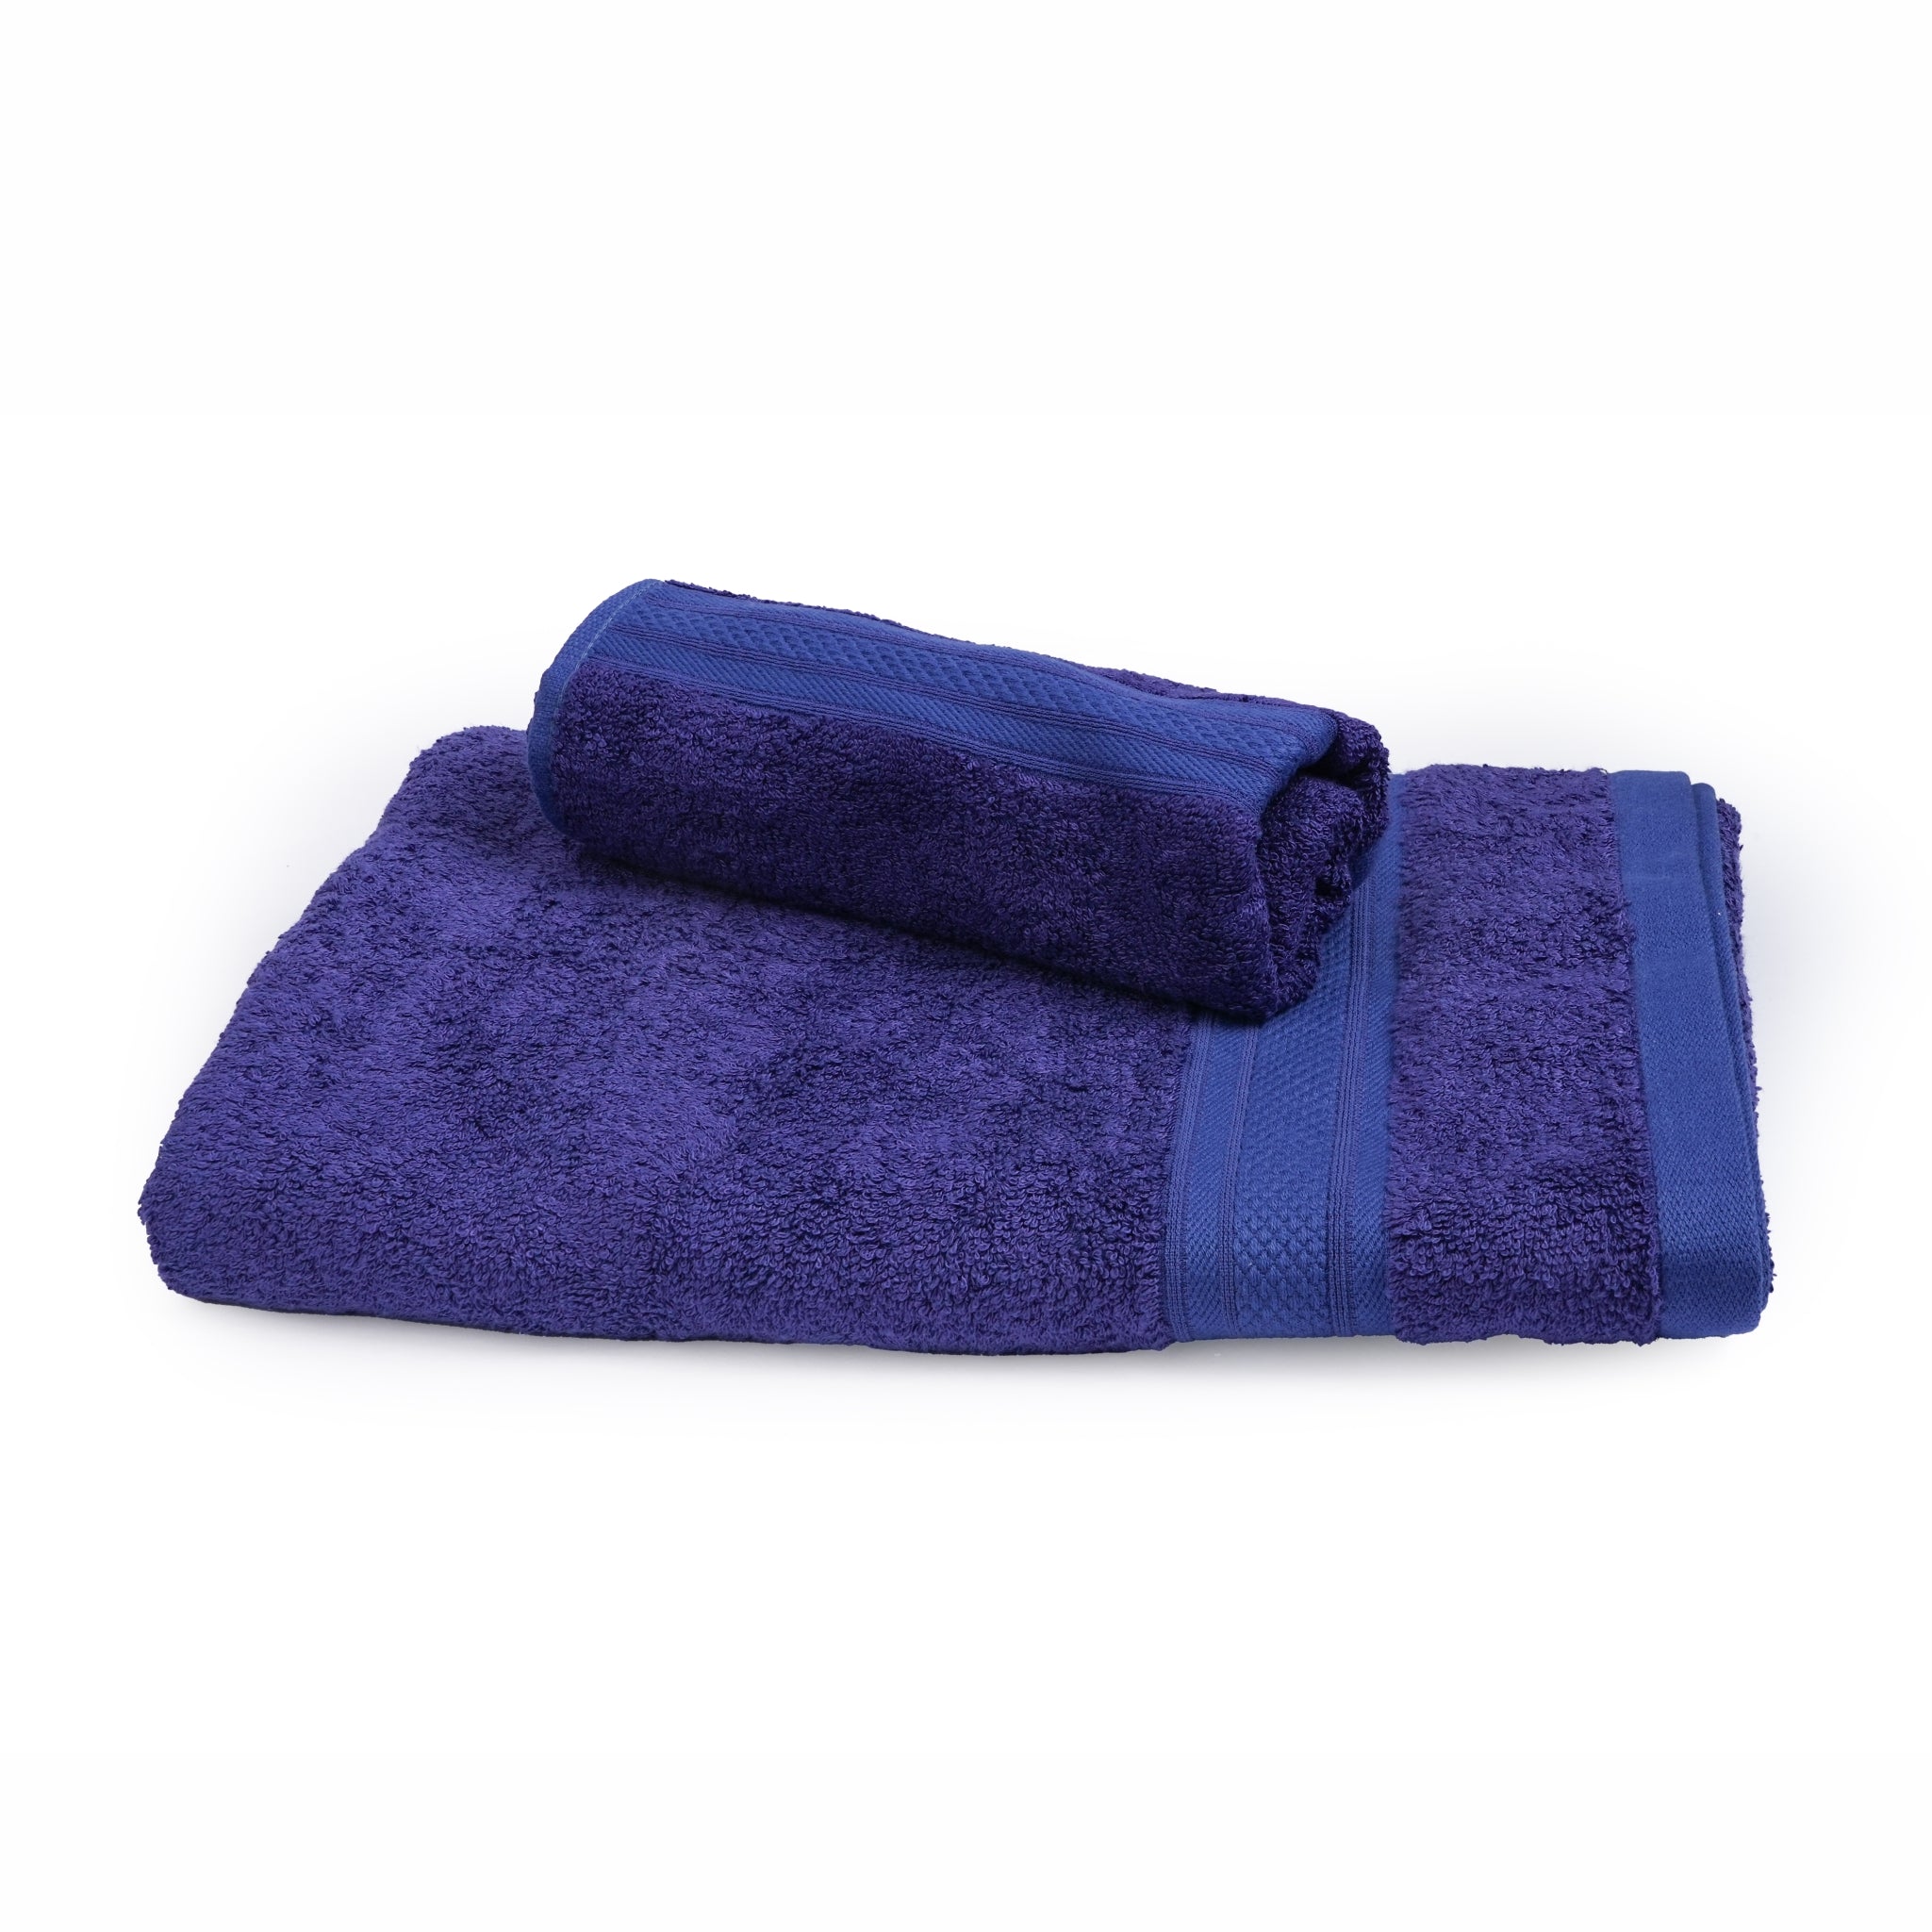 Bamboo towel combo (2 bath towel + 2 hand towel)